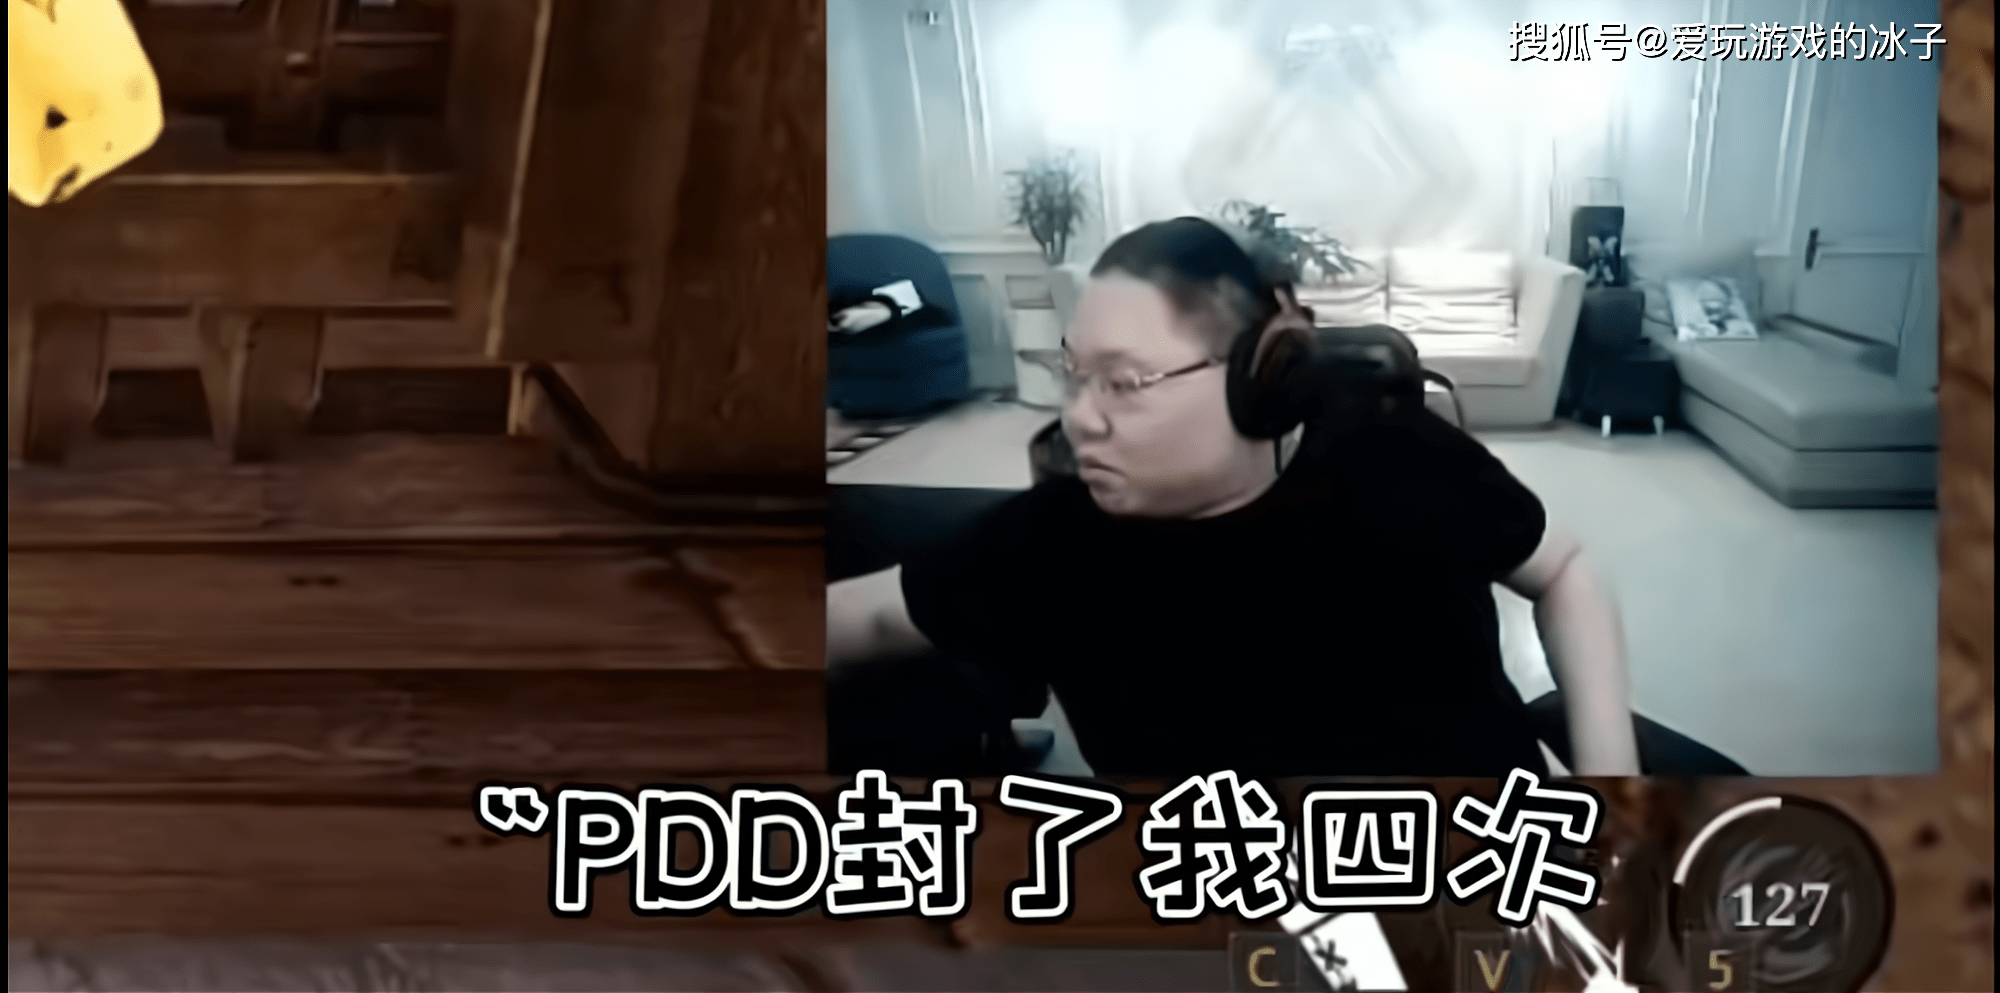 PDD遇到奇葩粉丝，粉丝提出一个很过分要求，PDD答应后却向他道歉